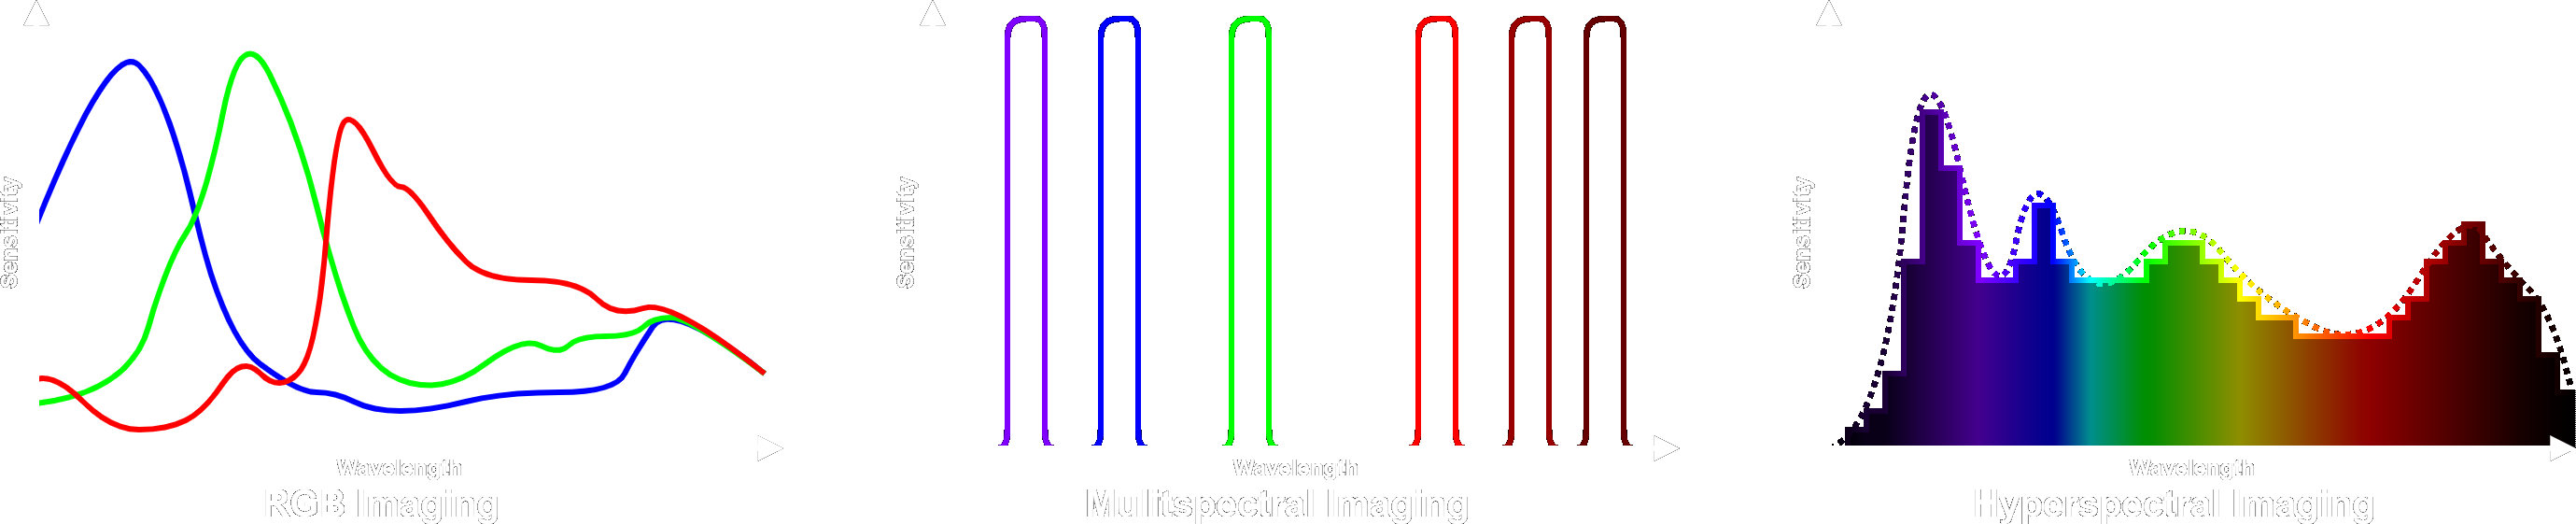 Spectral Imaging Types Pixel